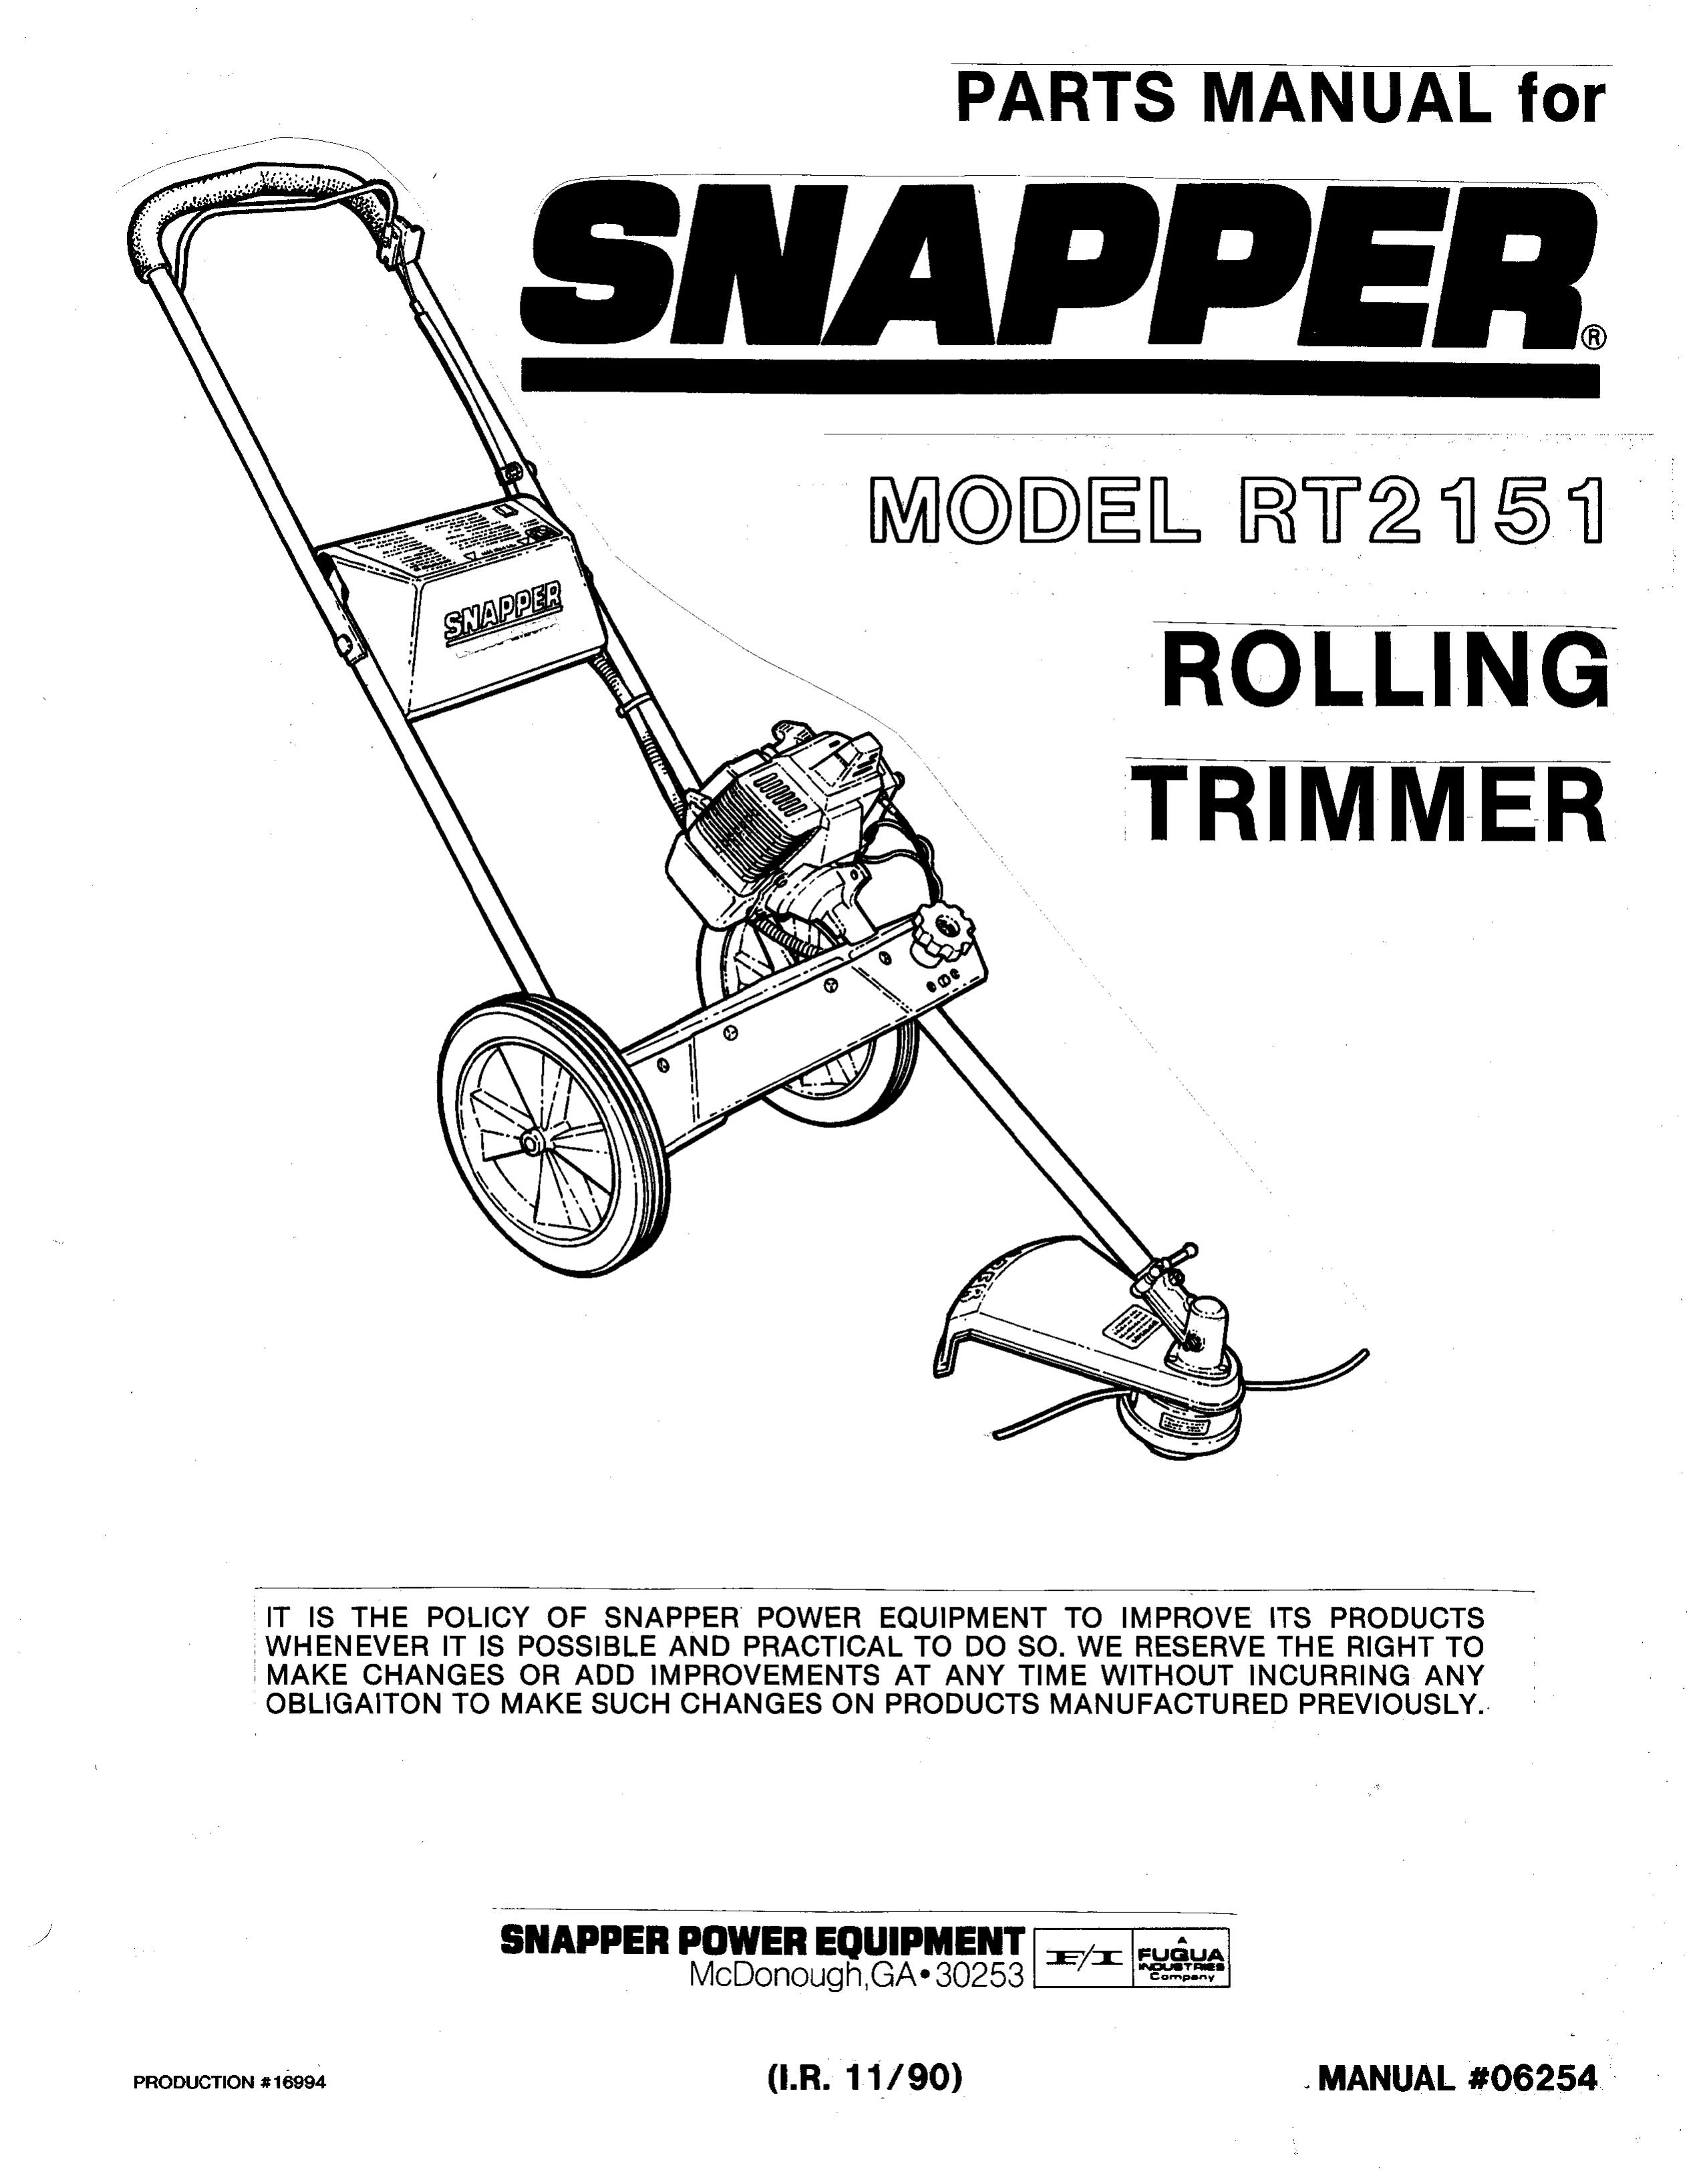 Snapper RT2151 Trimmer User Manual